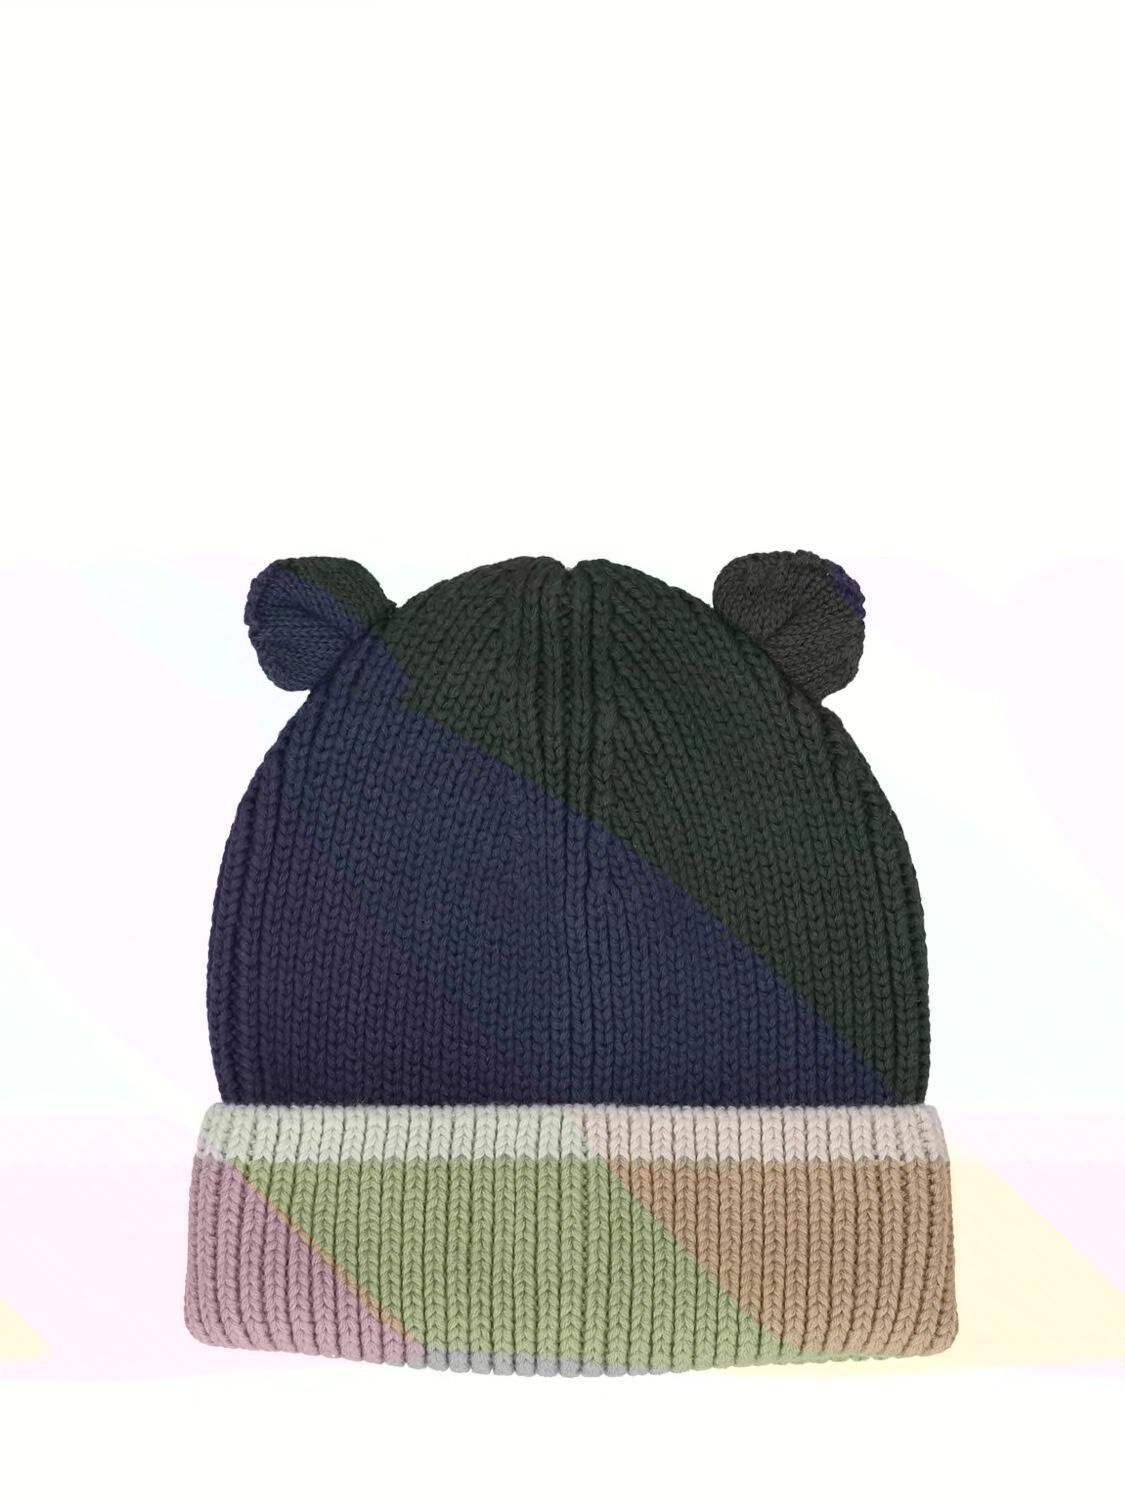 Organic Cotton Knit Hat W/ Ears by LIEWOOD